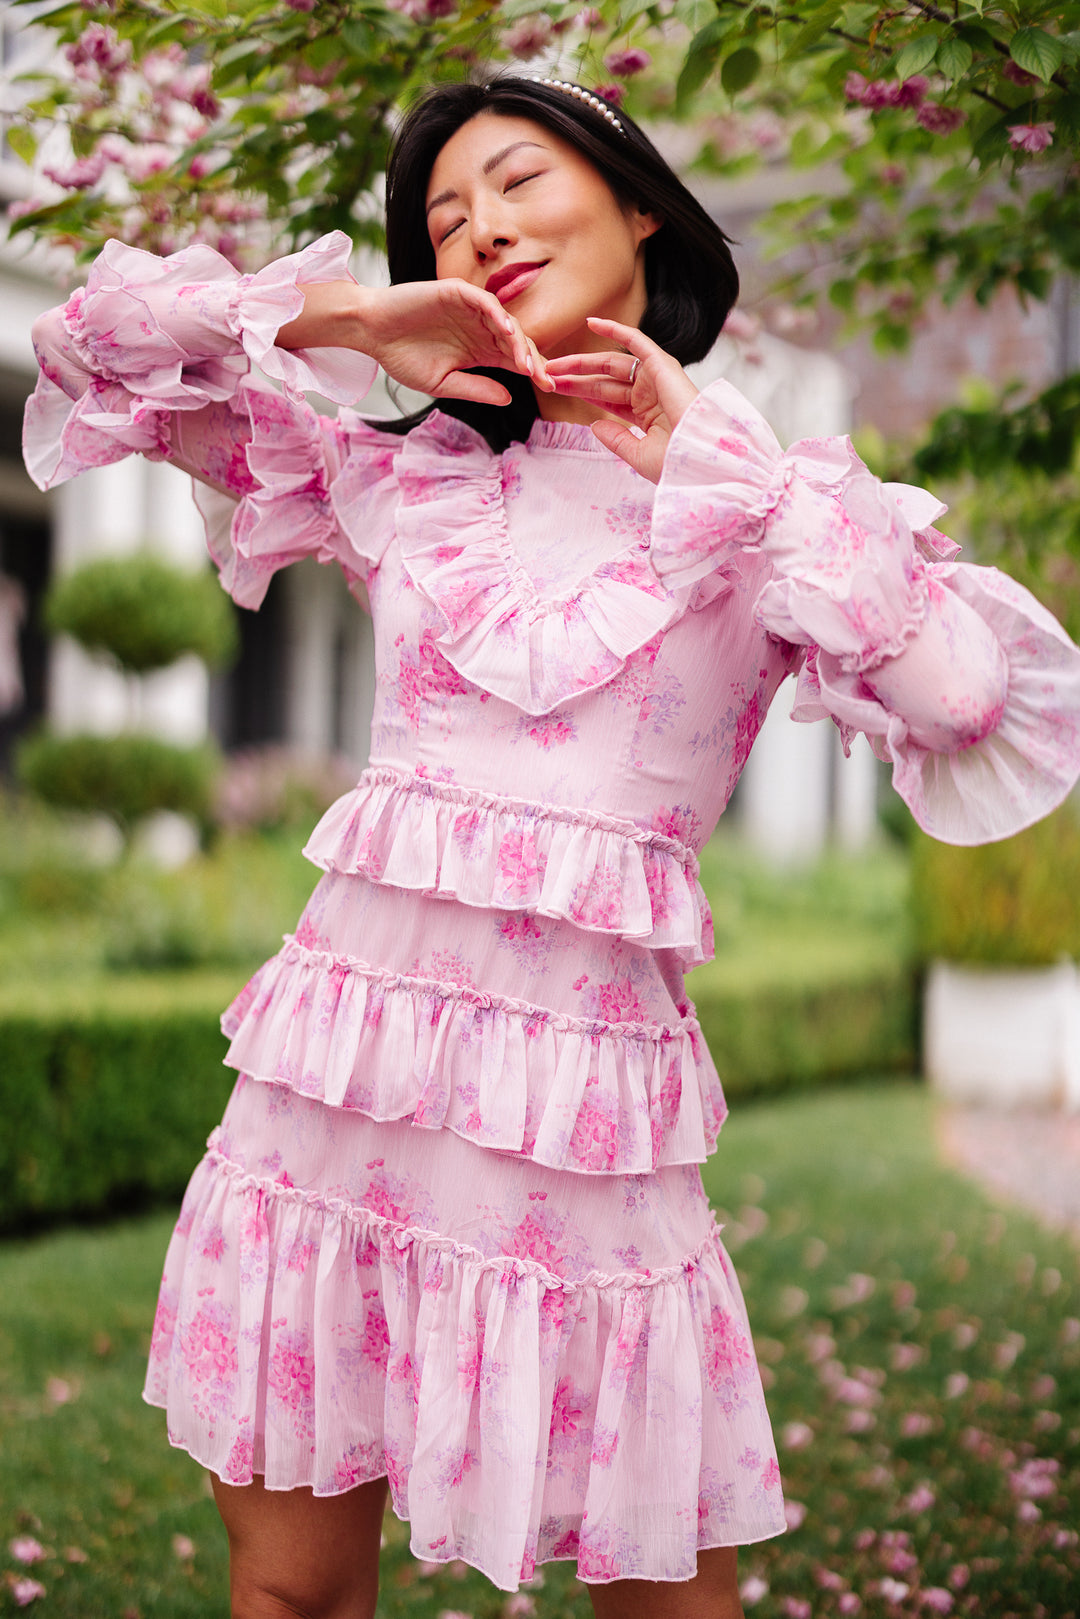 Garden State Dress in Pink - FINAL SALE